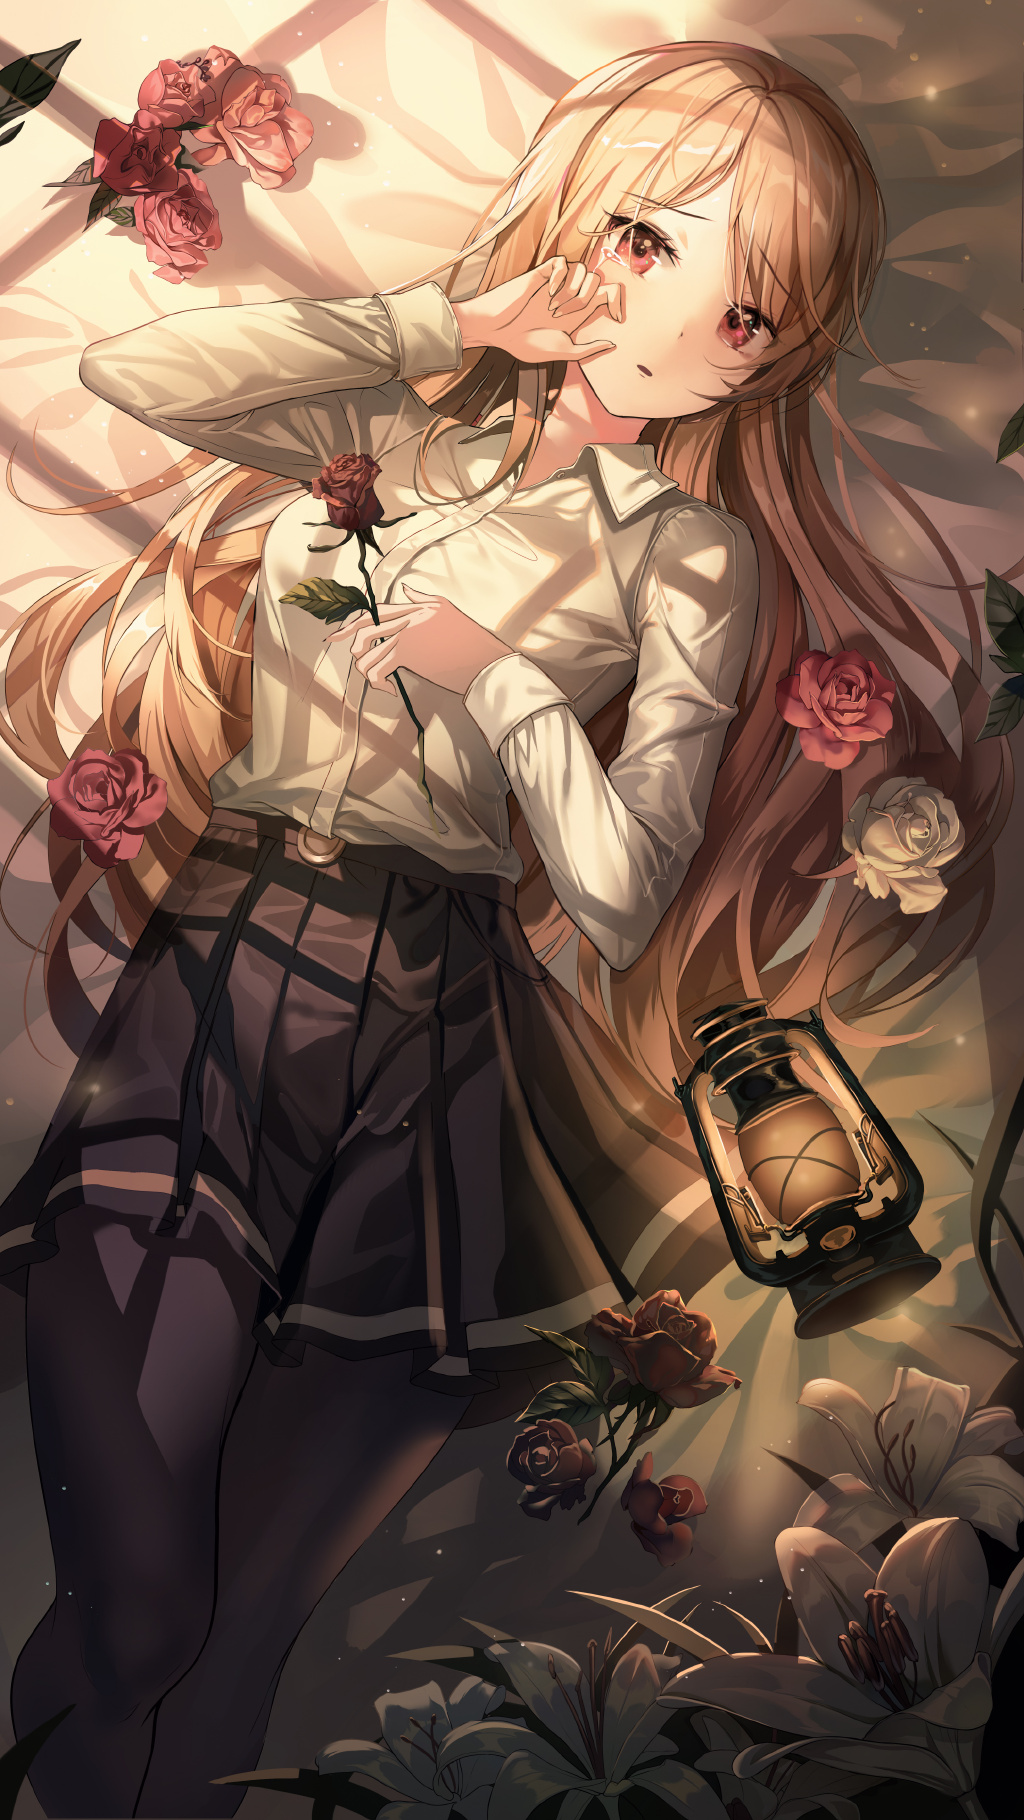 Anime 1024x1820 anime anime girls rose flowers school uniform in bed blonde long hair red eyes tears artwork